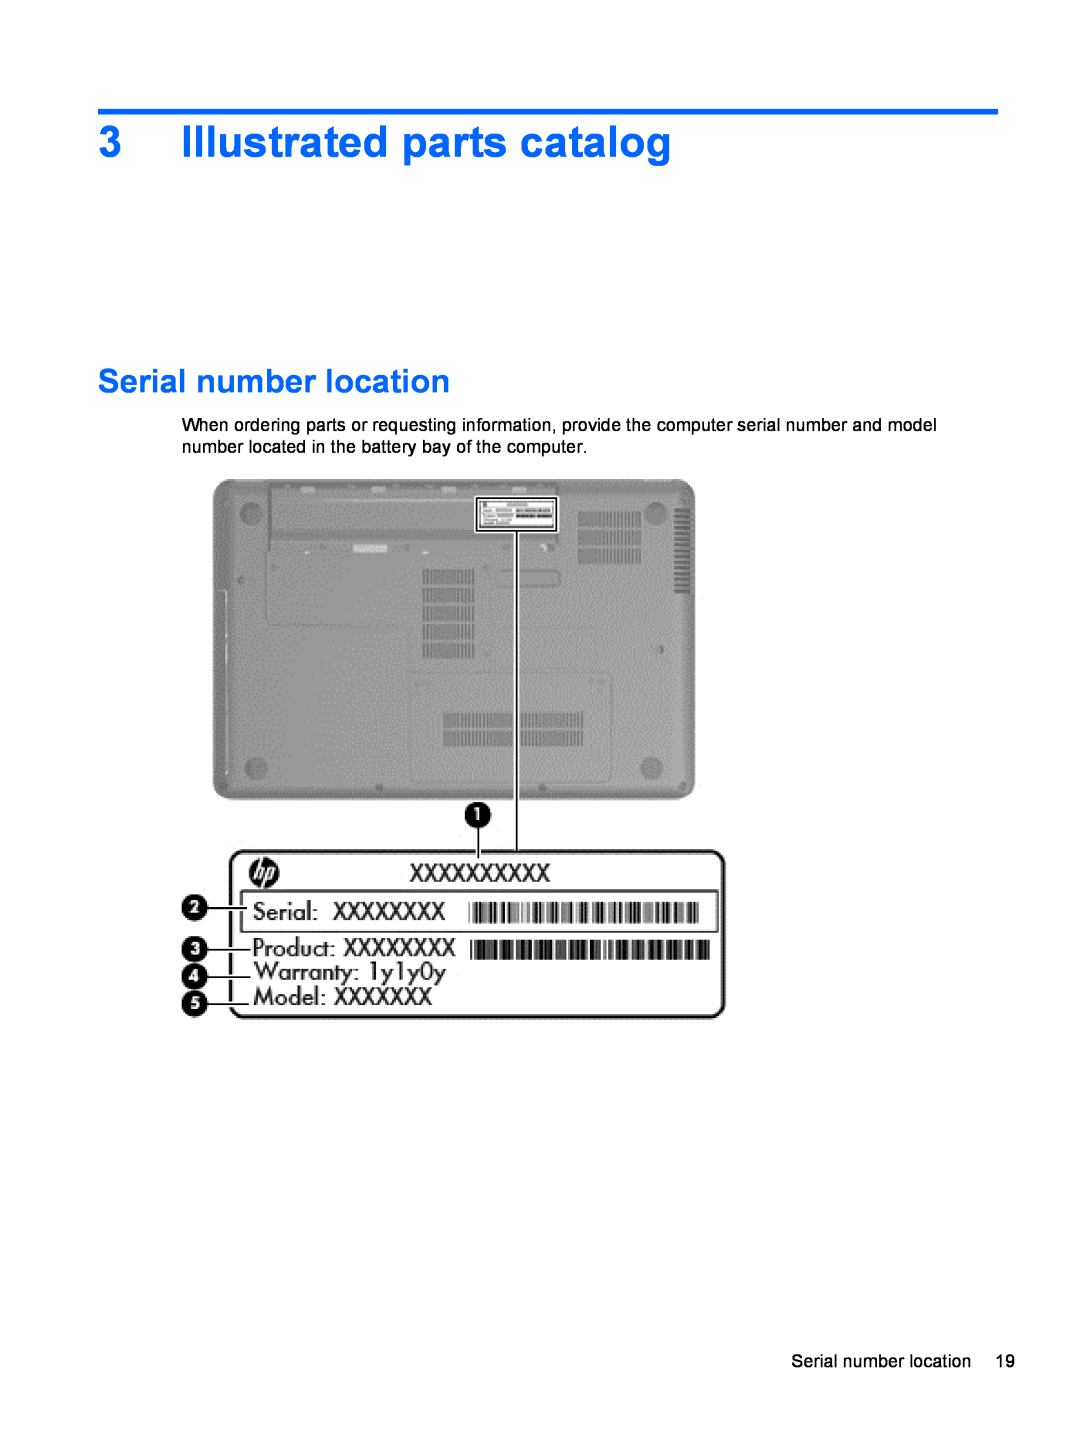 Compaq CQ42 manual Illustrated parts catalog, Serial number location 